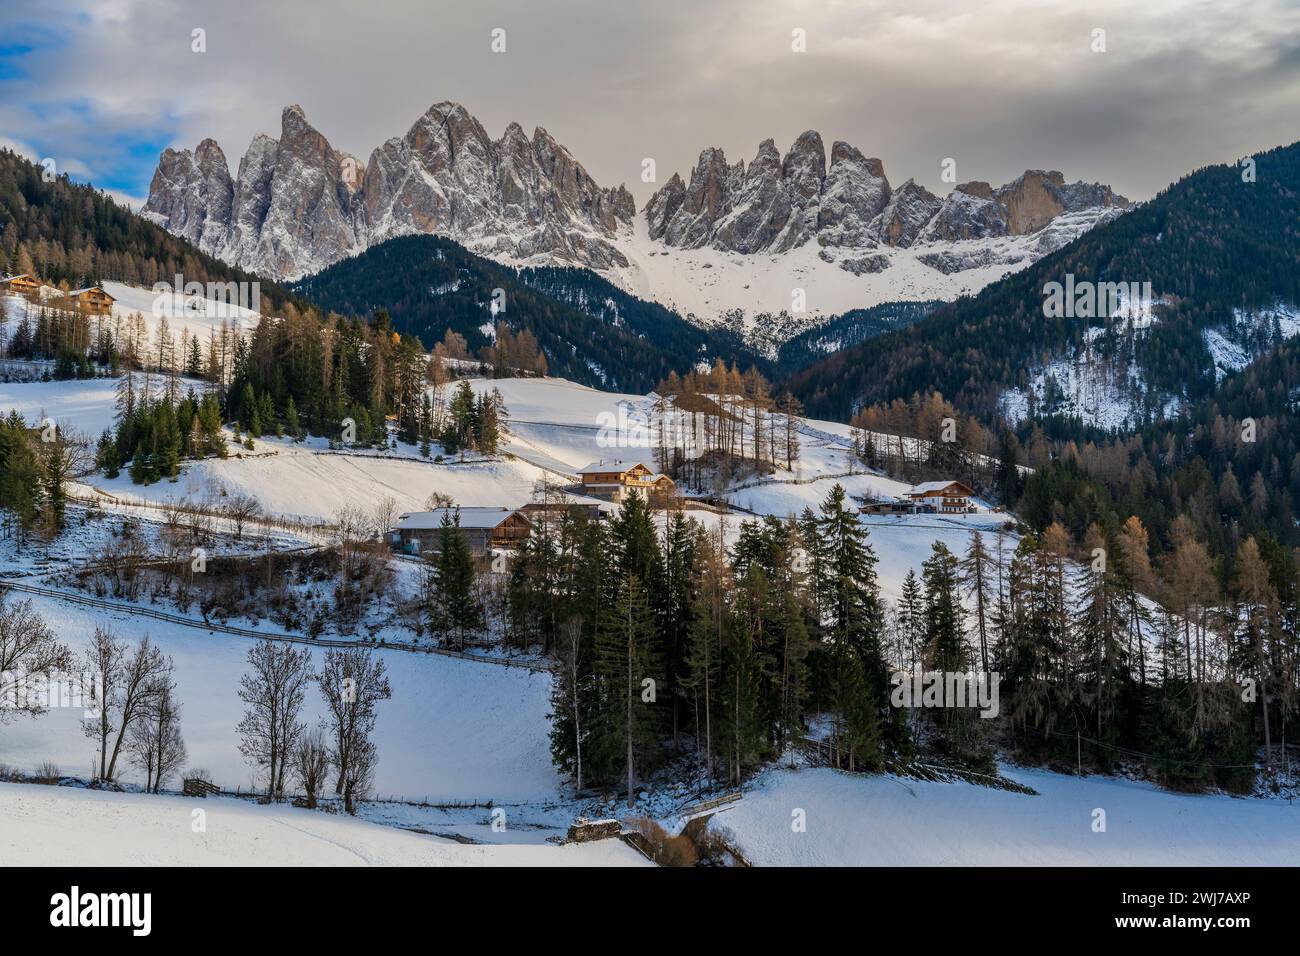 Vista panoramica invernale del gruppo montuoso Odle (Geislergruppe), Dolomiti, Villnoss-Funes, alto Adige, Italia Foto Stock